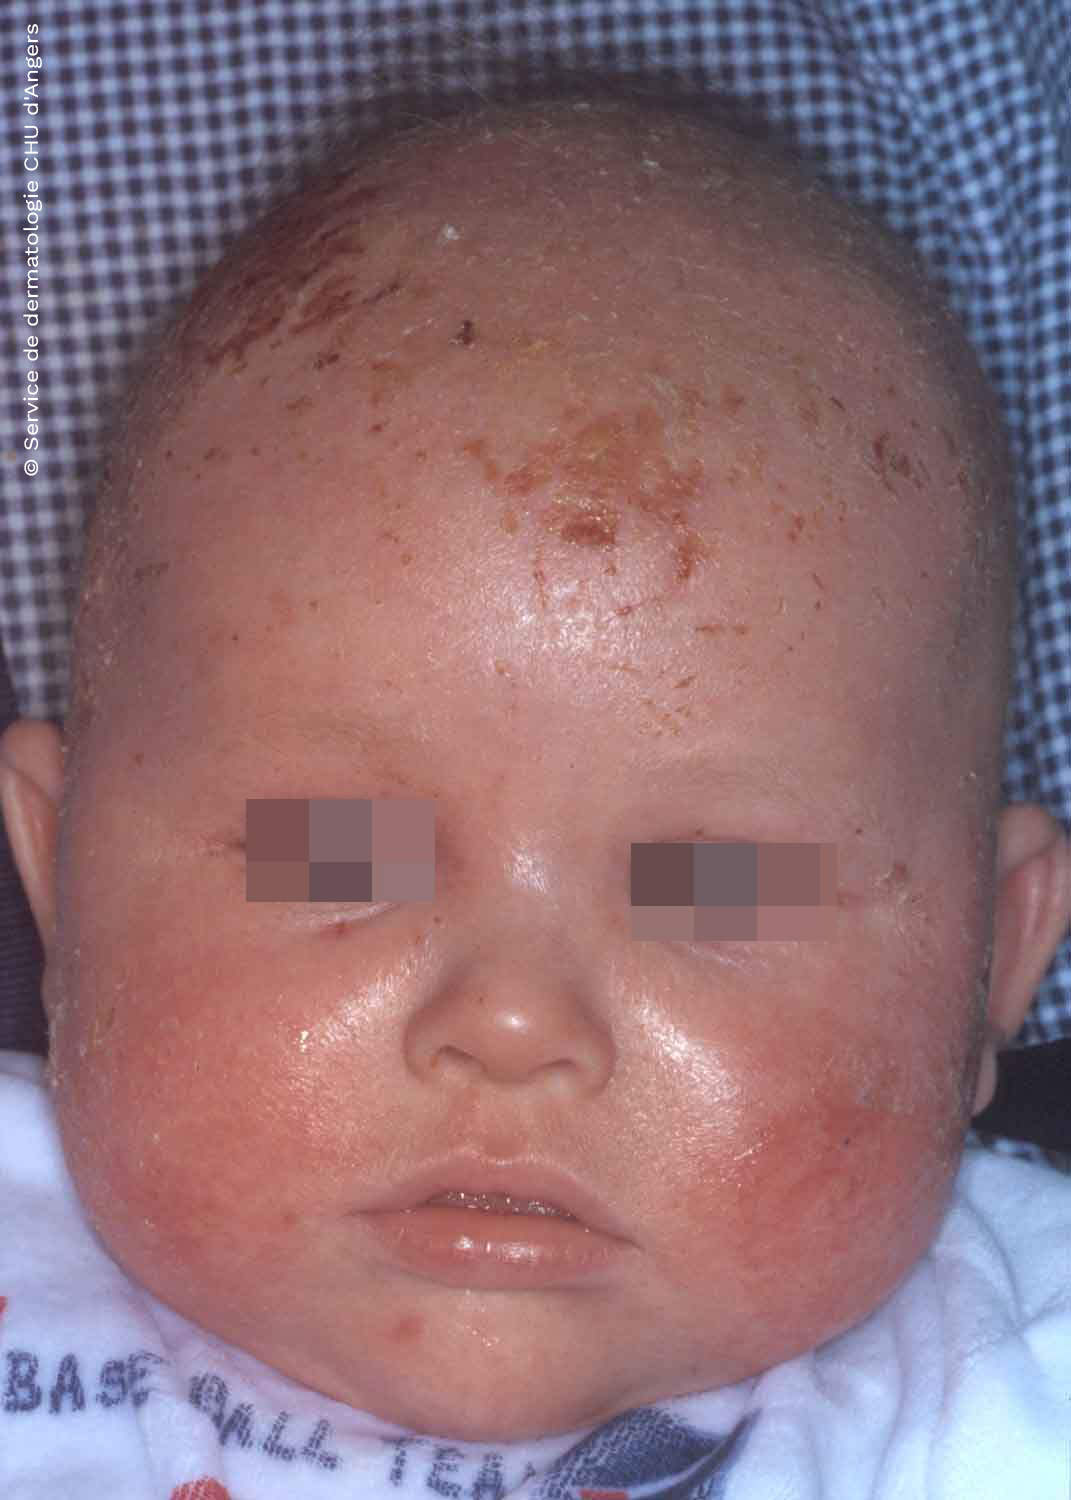 Dermatite atopique de l'enfant